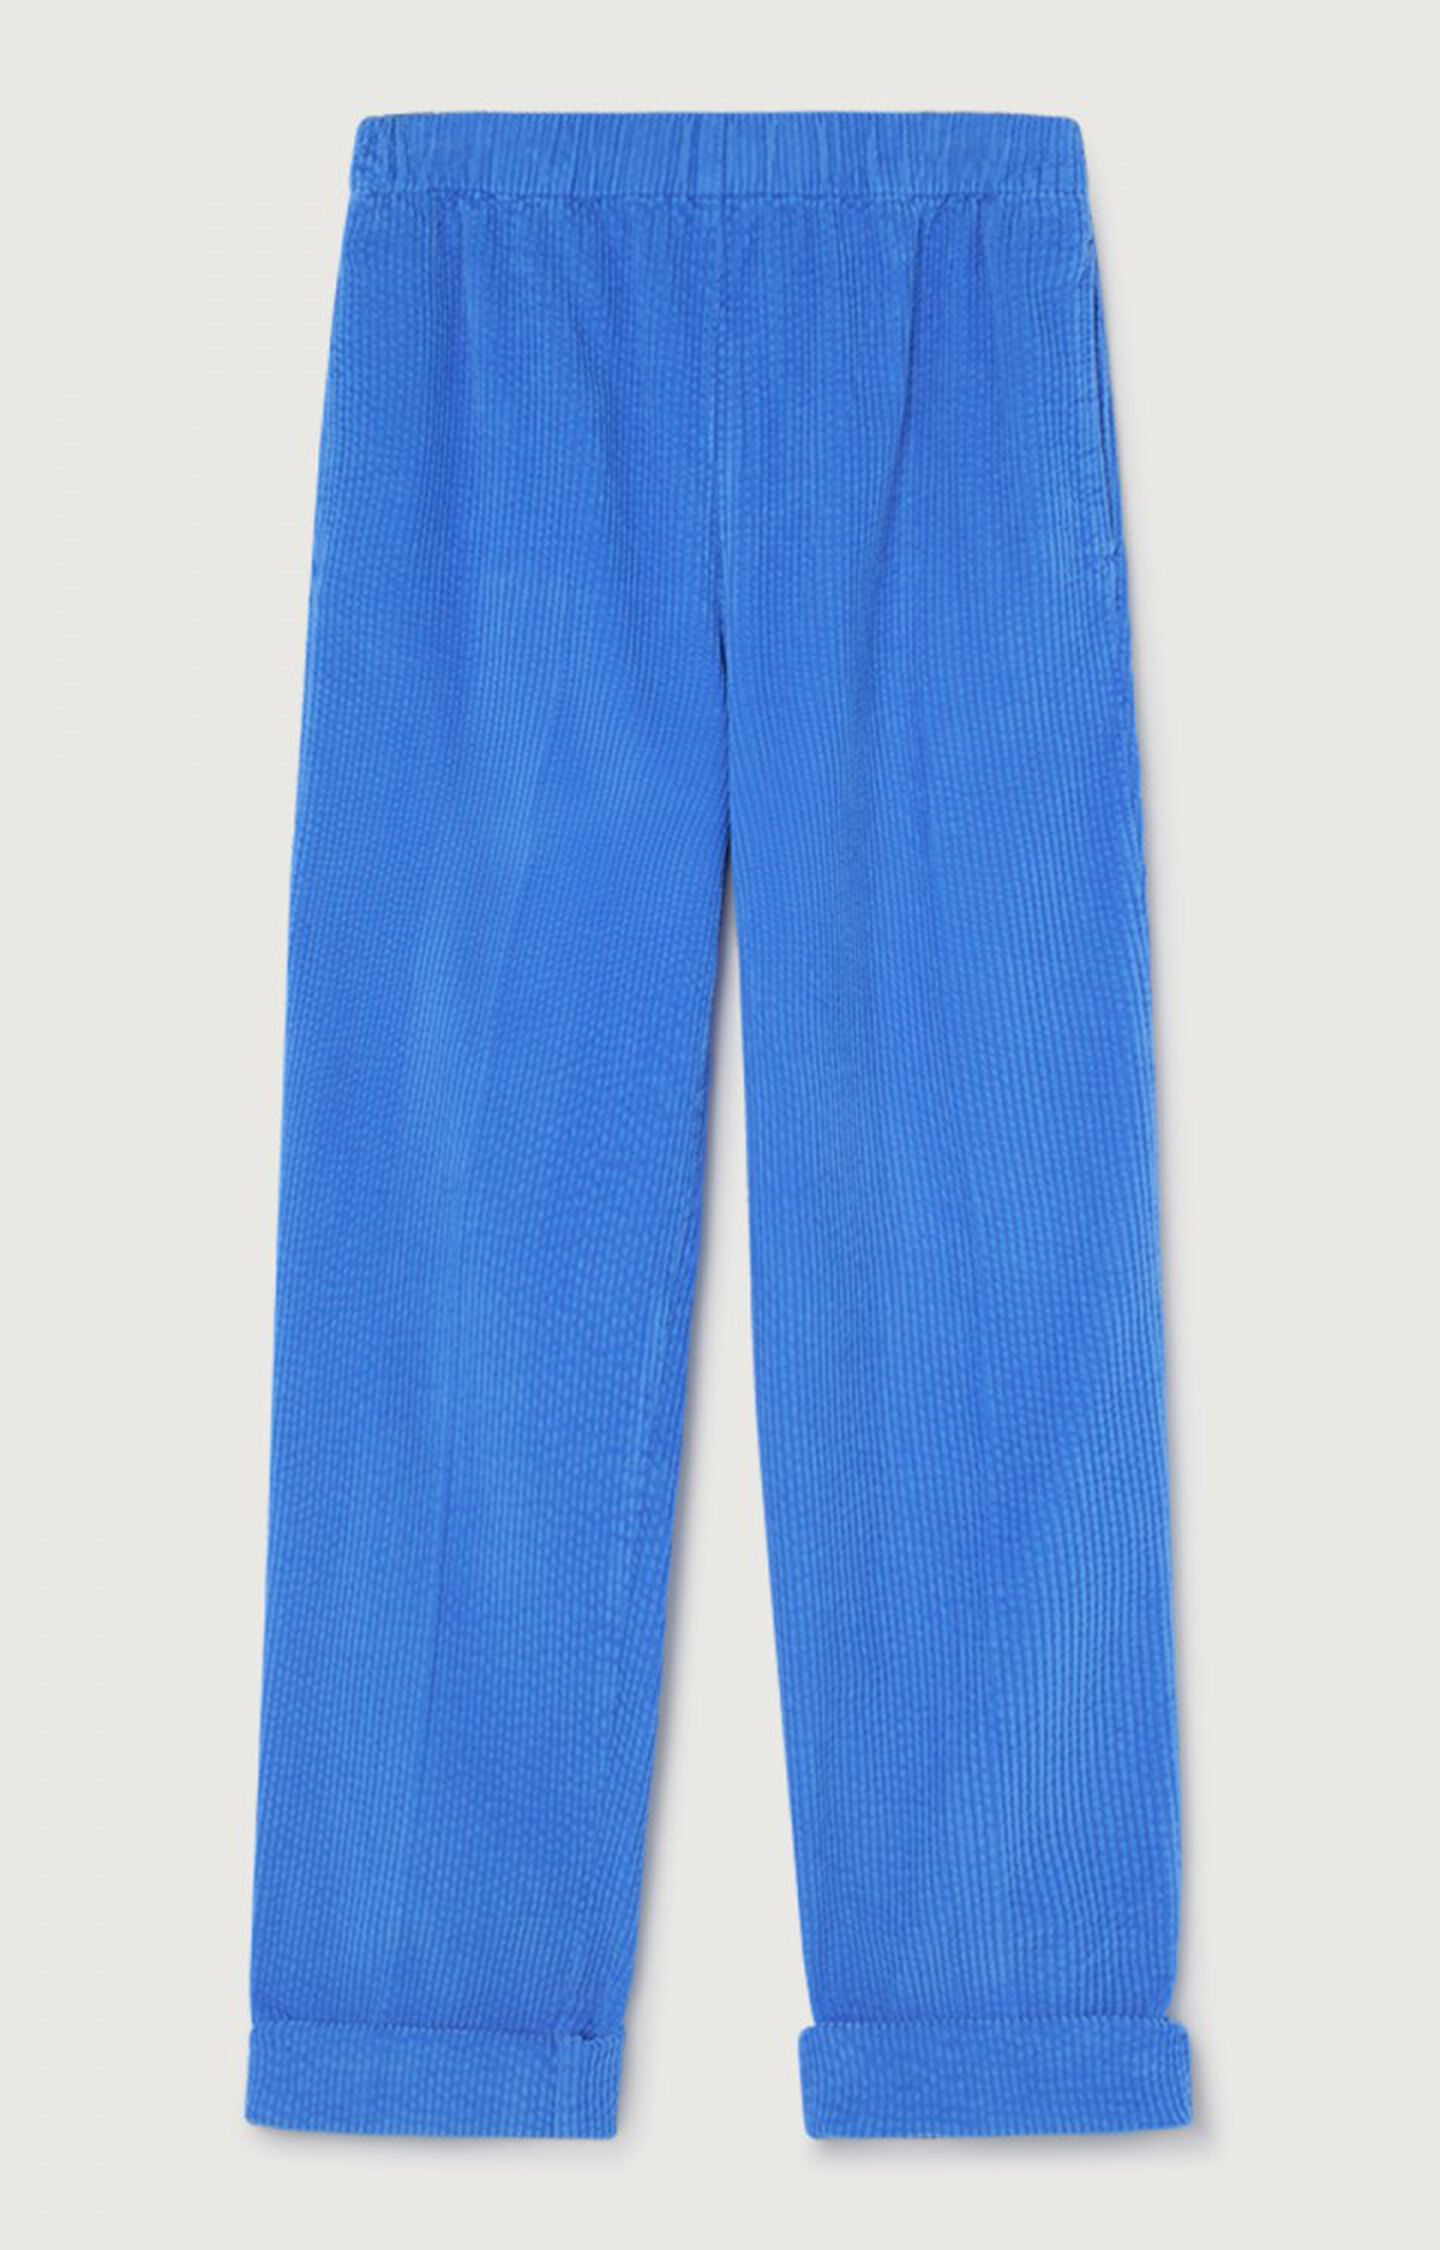 Pantalon de cuisine Bromley Bleu Check C079 - Abipro